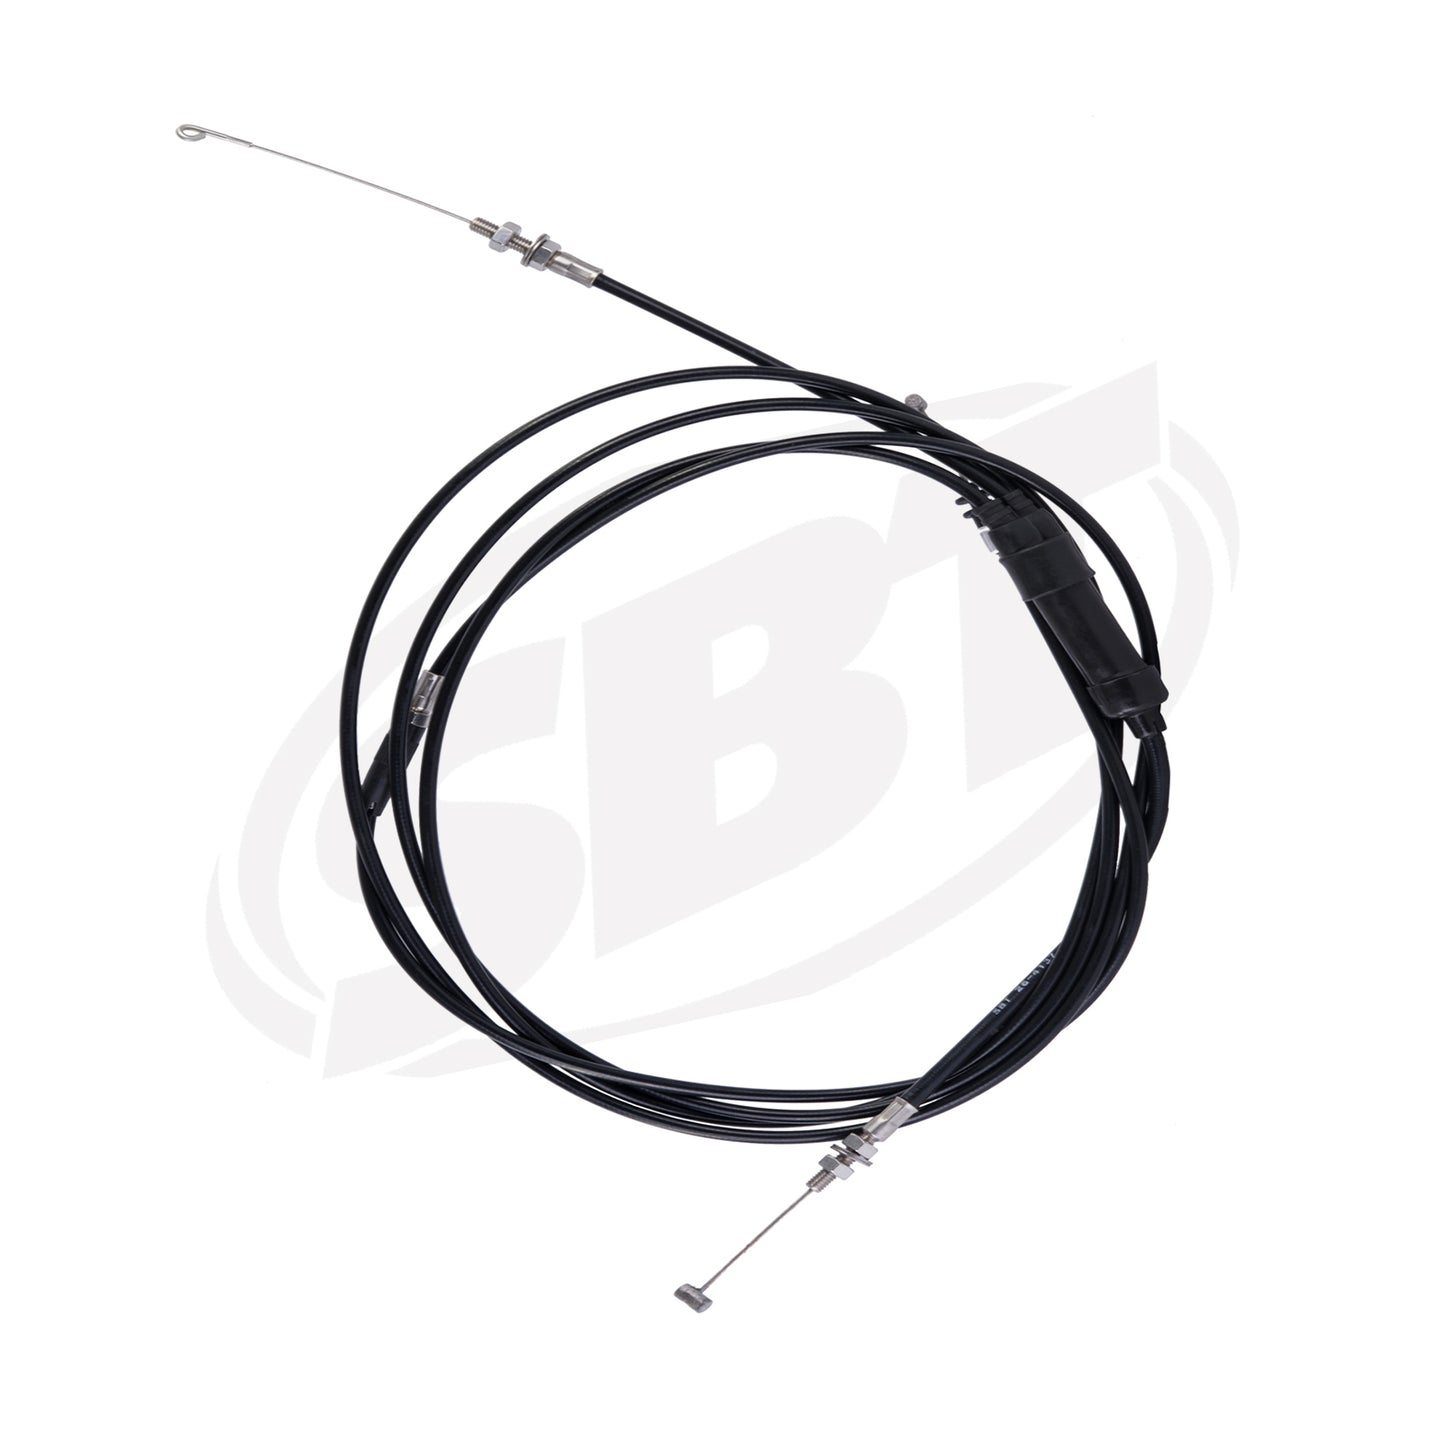 SBT Sea-Doo Throttle Cable 3D RFI 277001416 2005 ( PRE ORDER )